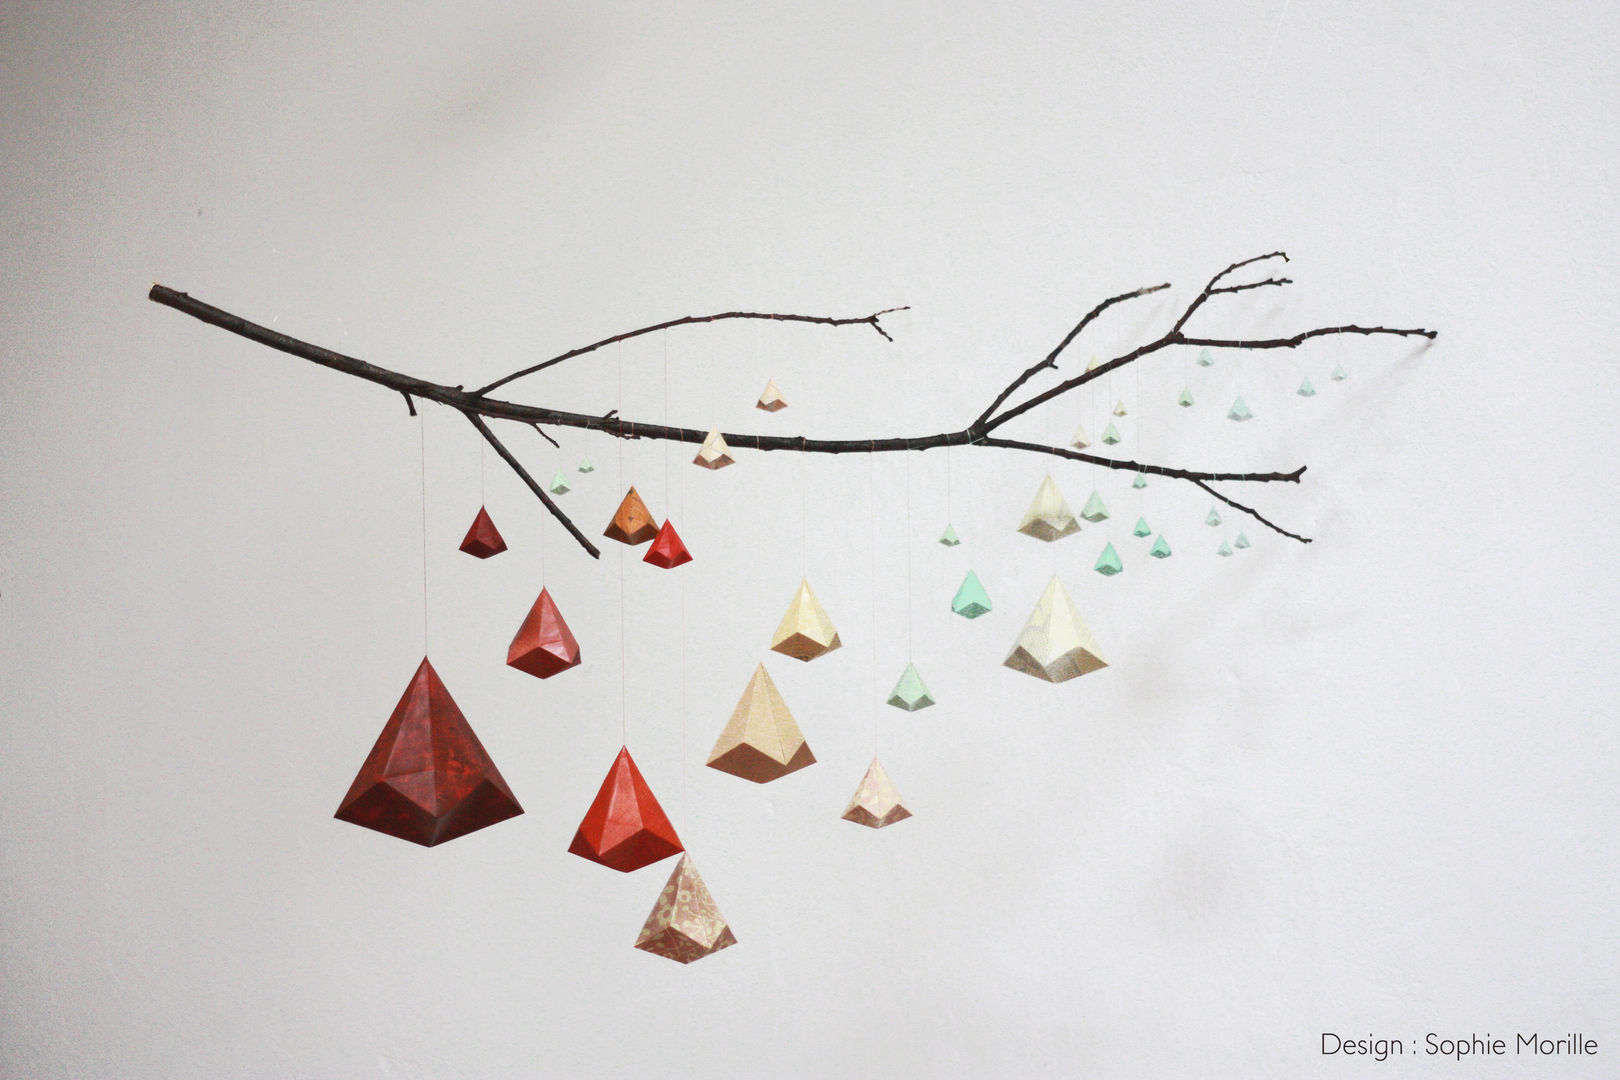 " Objets à rêves" en origami, Sophie Morille Designer Textile Sophie Morille Designer Textile Otros espacios Objetos artísticos